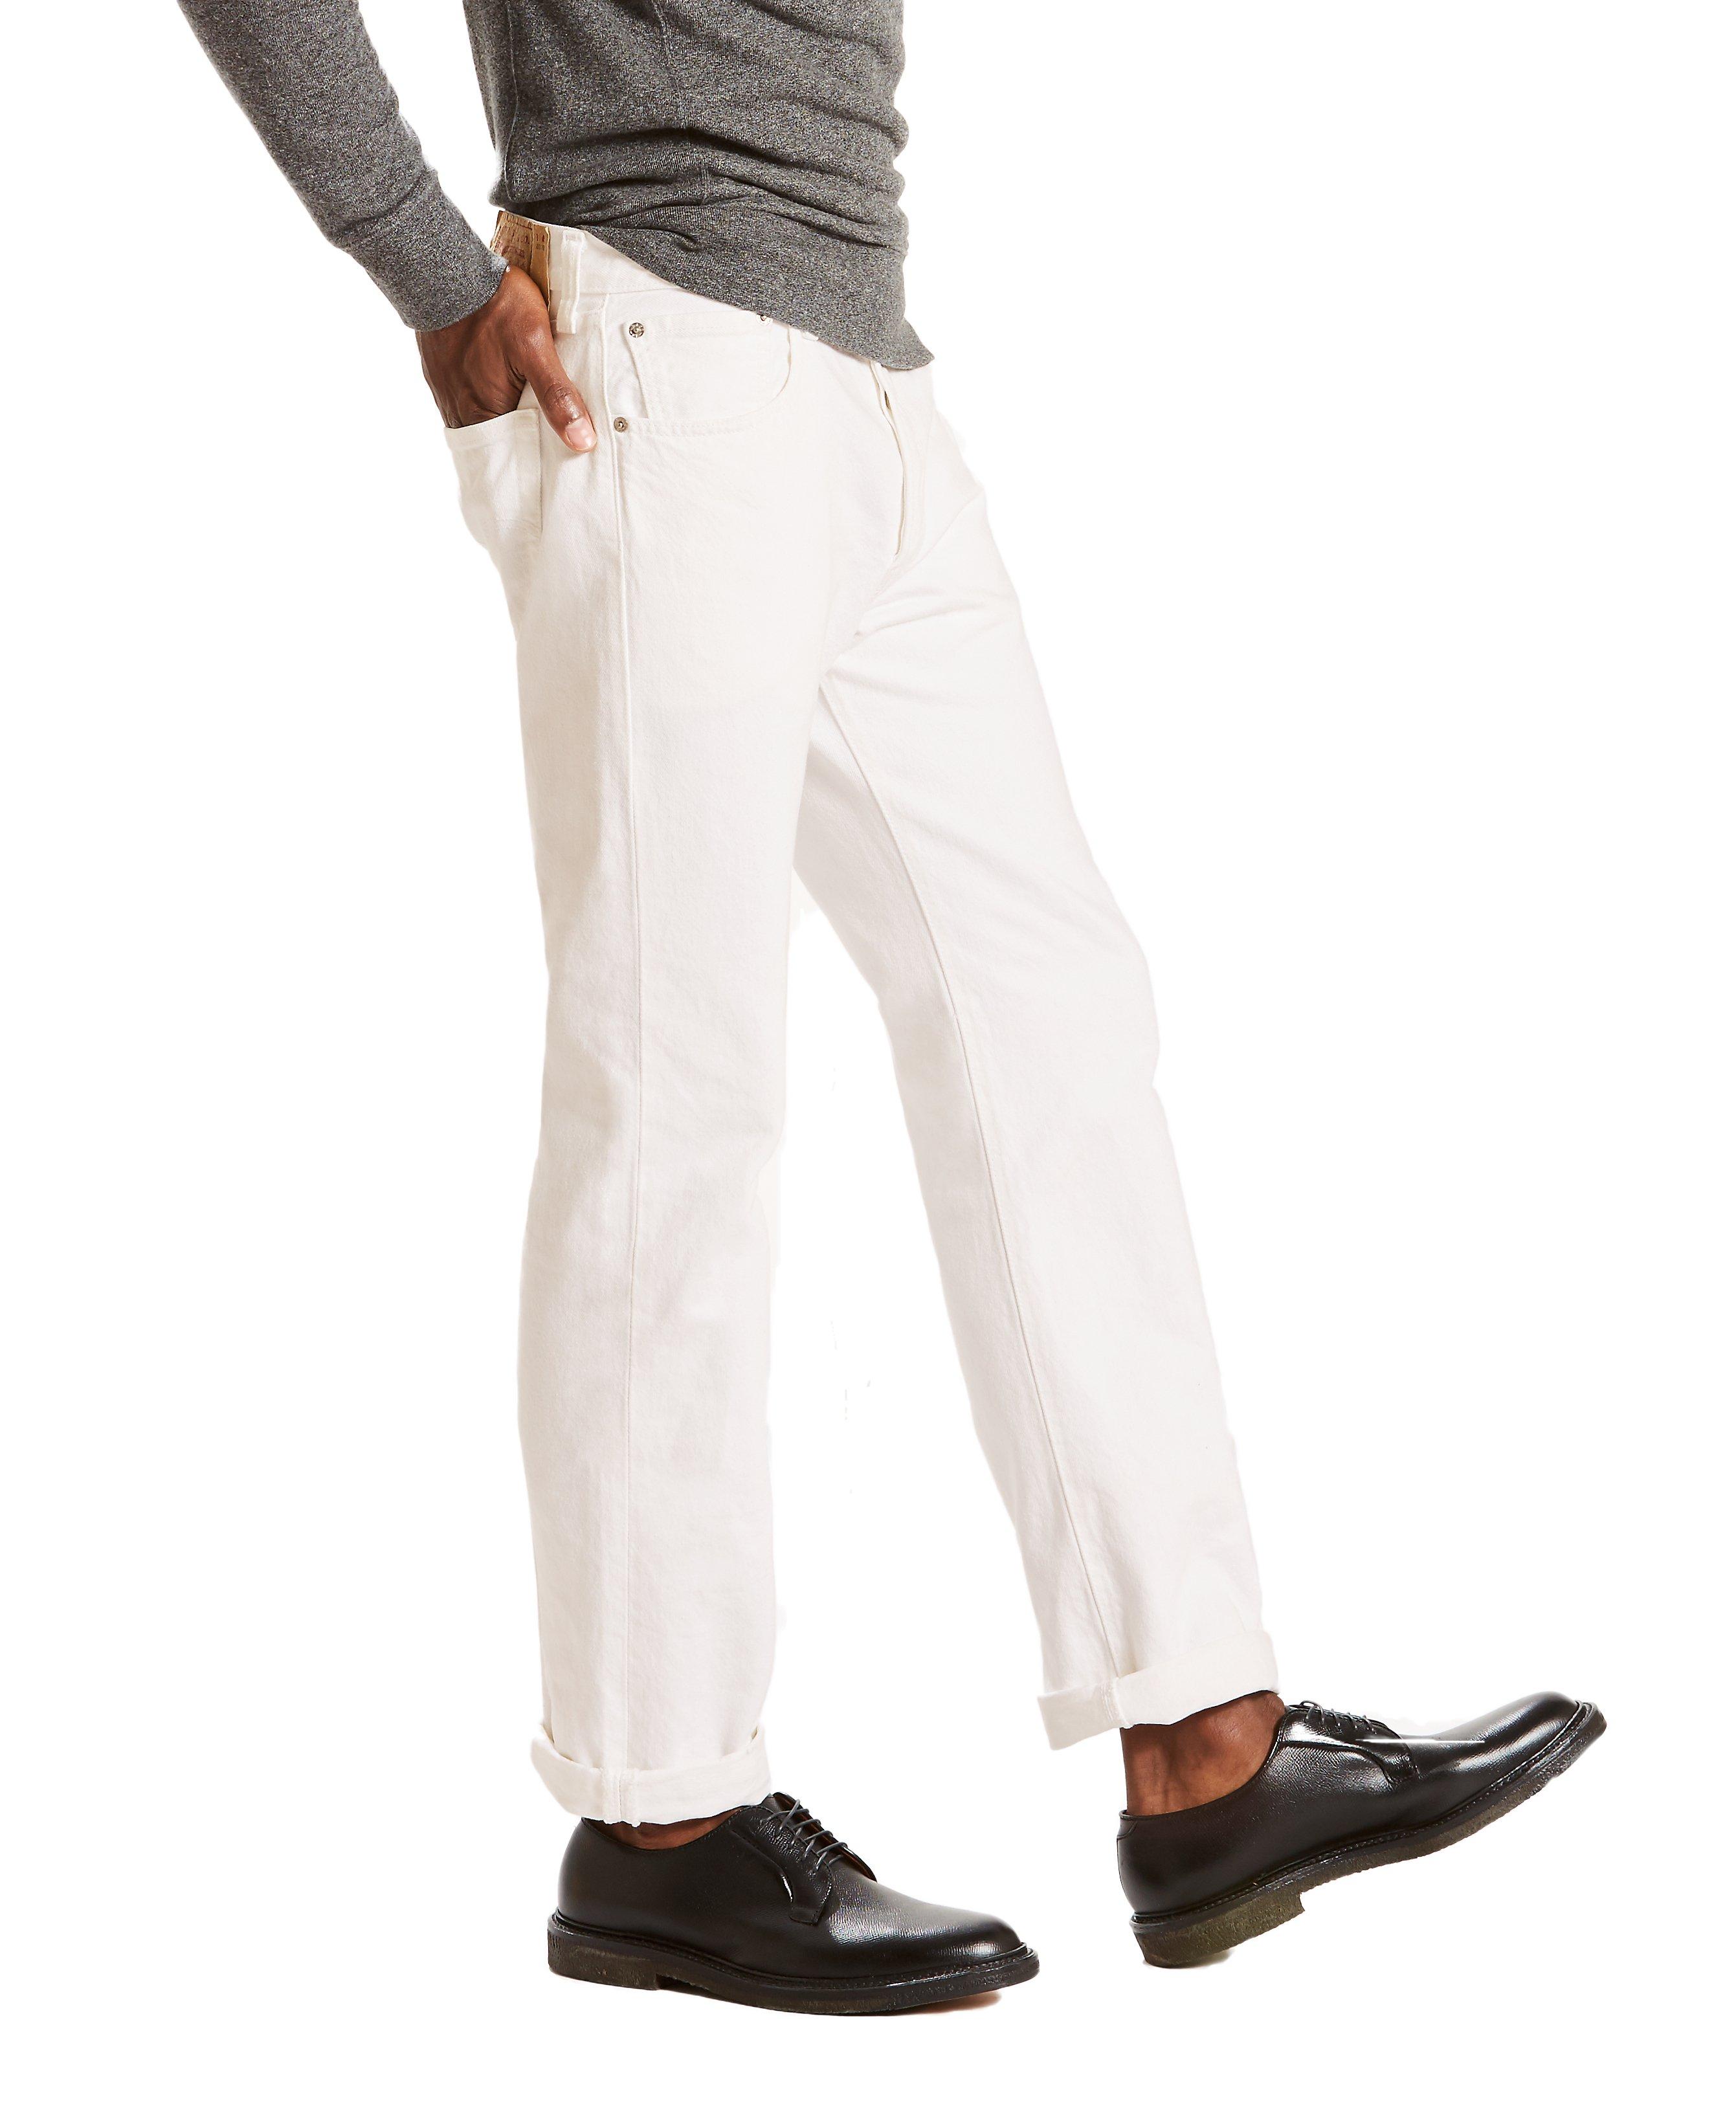 Levi's Men's 501 Original Straight Fit White Jeans - Hibbett